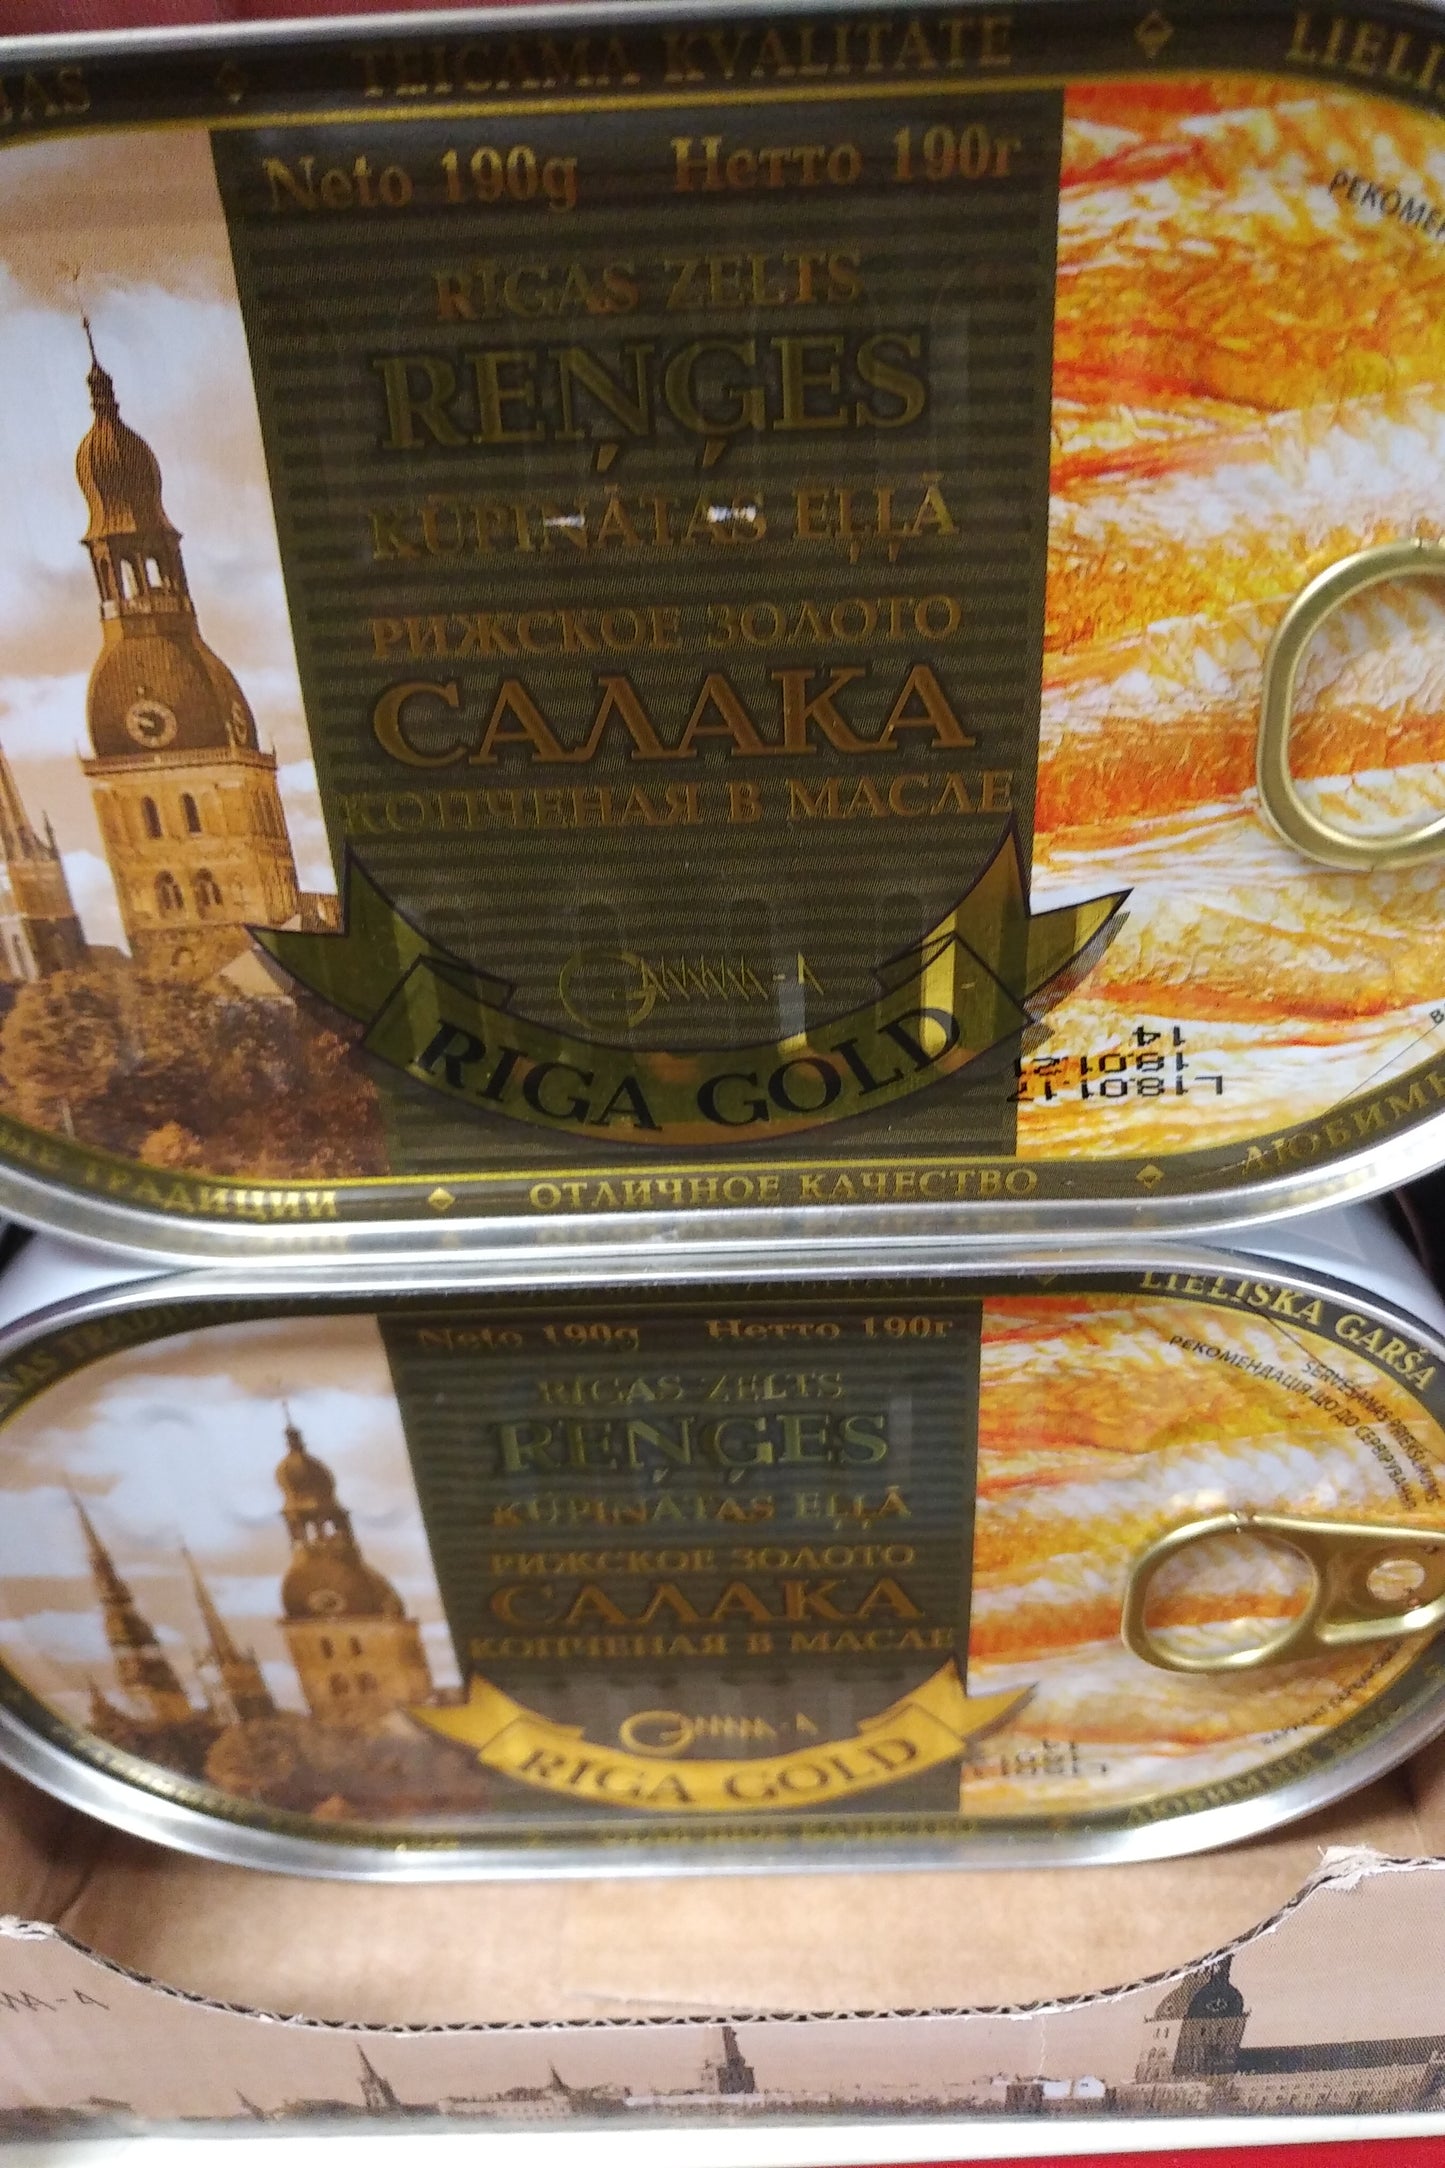 Amberye Riga Gold Smoked Baltic Herring in Oil
6.7oz